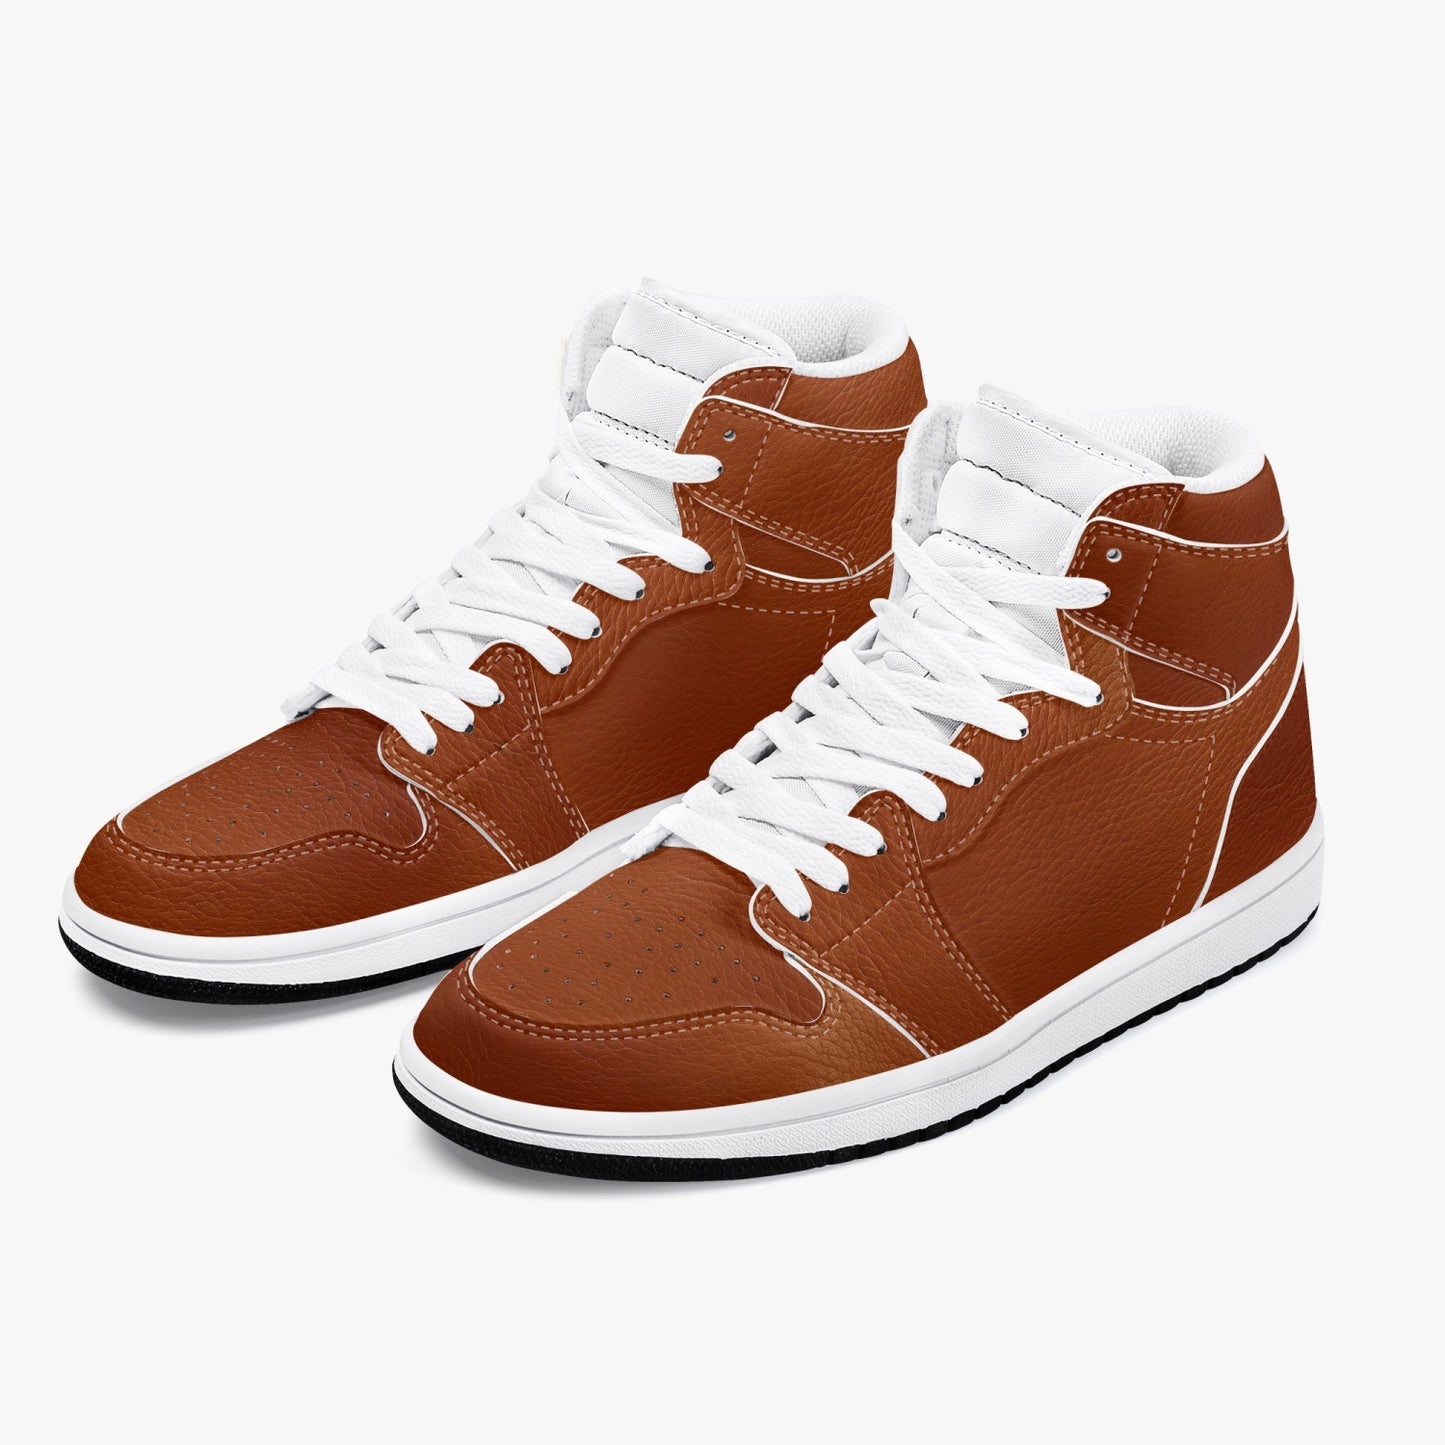 Brown Tan High Top Leather Shoes Sneakers, White Black Men Women Lace Up Vegan Footwear Rave Streetwear Designer Gift Idea